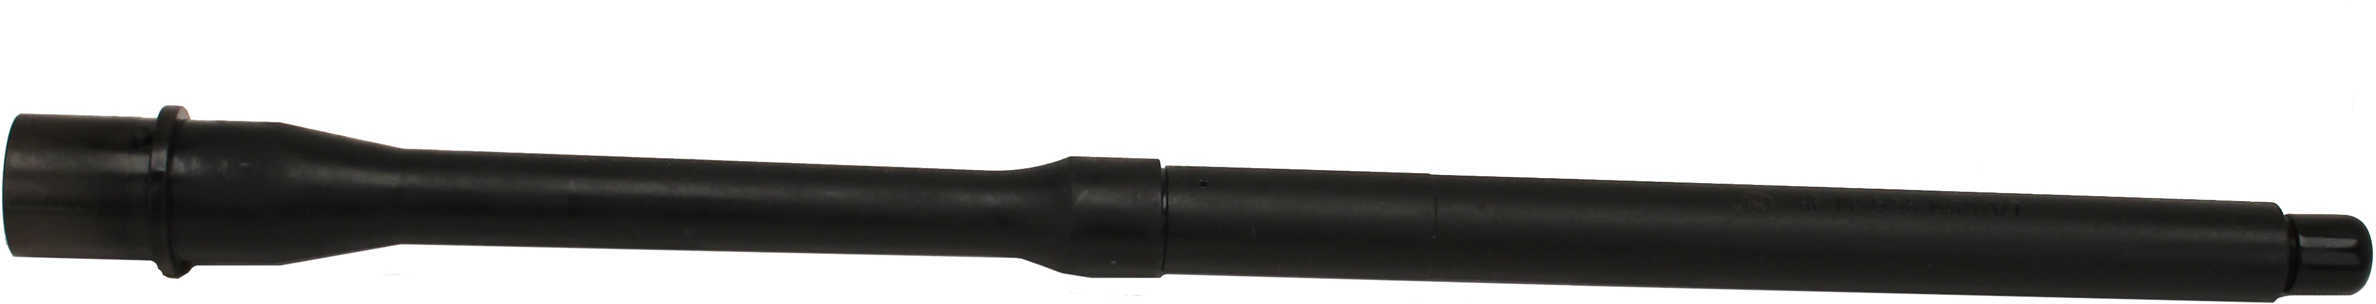 FNH 36421 AR-15 Hammer-Forged Barrel 223/5.56 16" Carbine Length Gas System